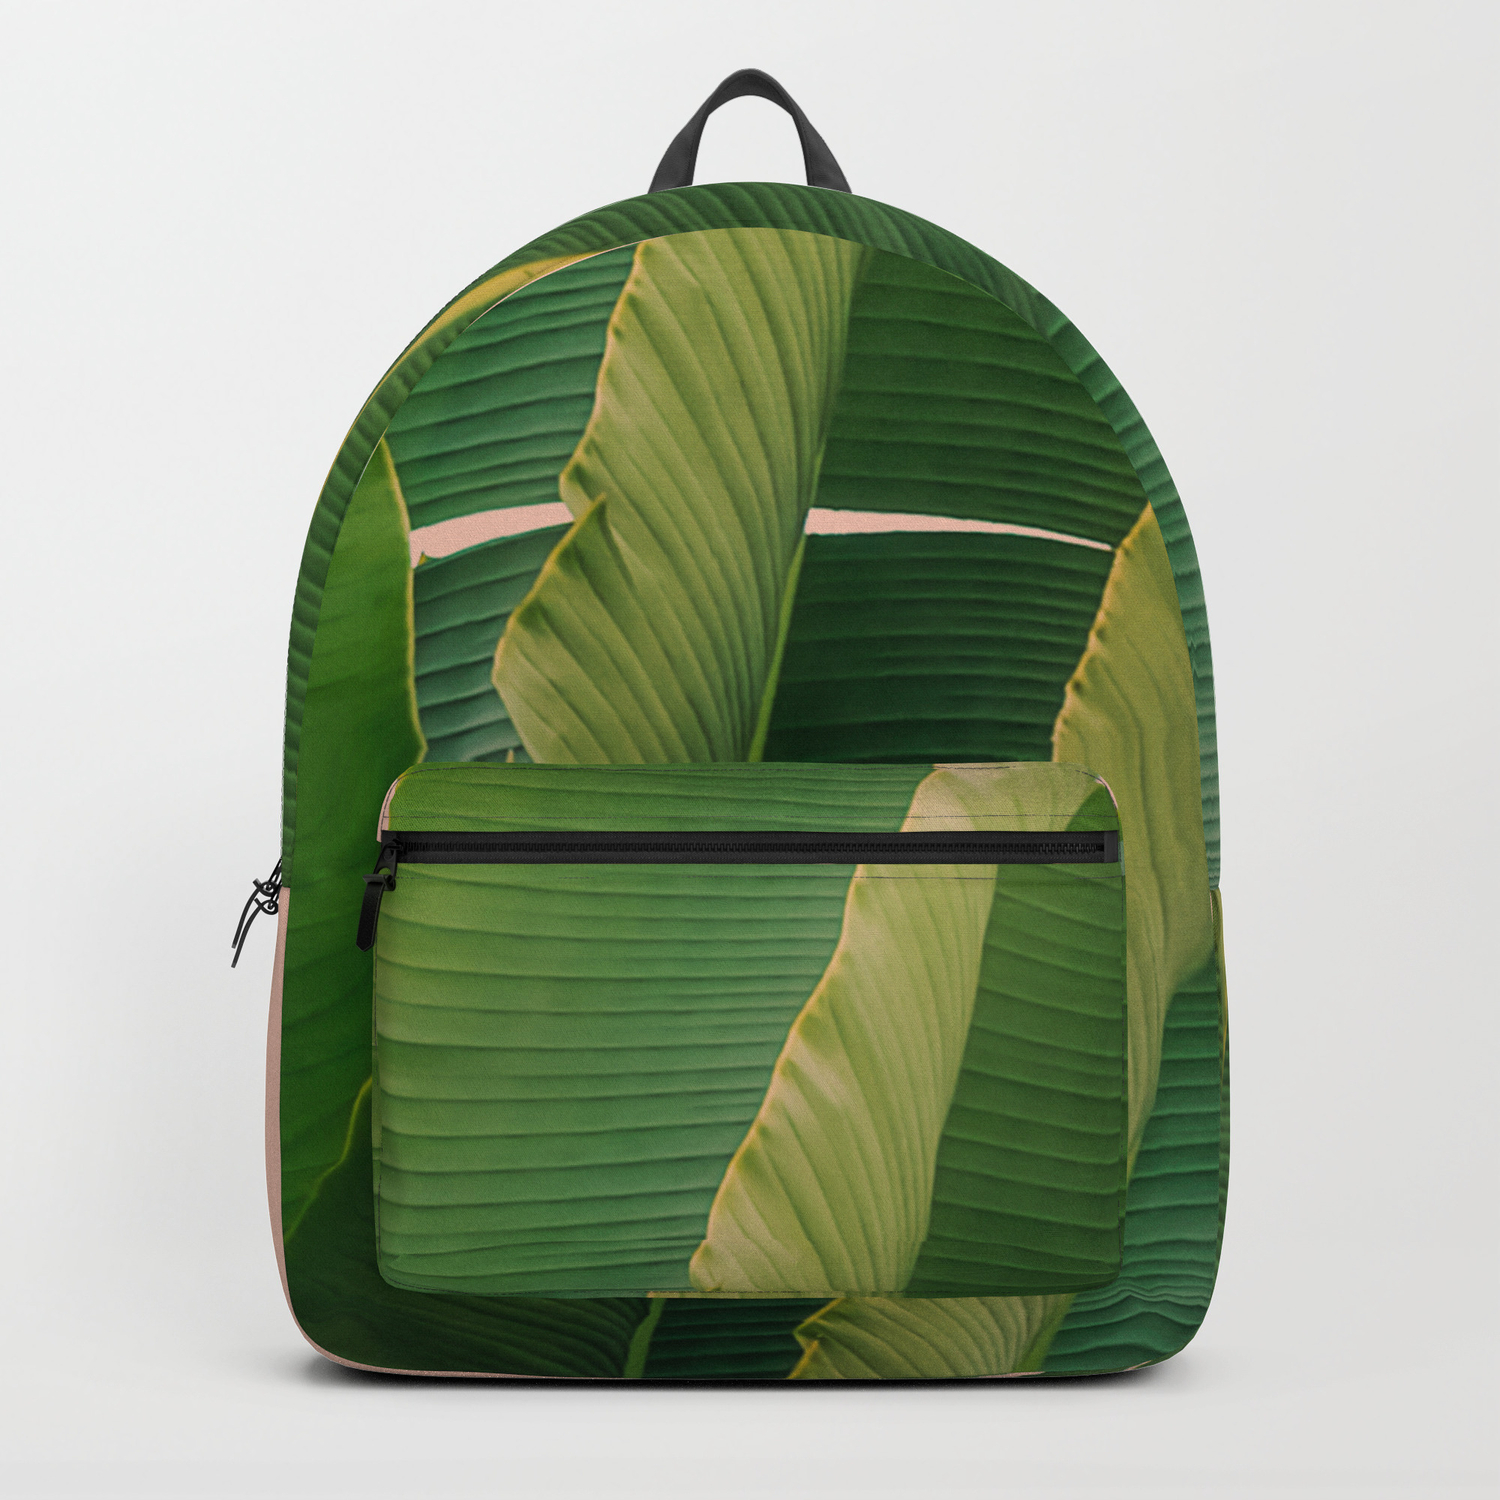 MONTOJ Green Banana Leaves Canvas Backpack Travel Campus Backpack